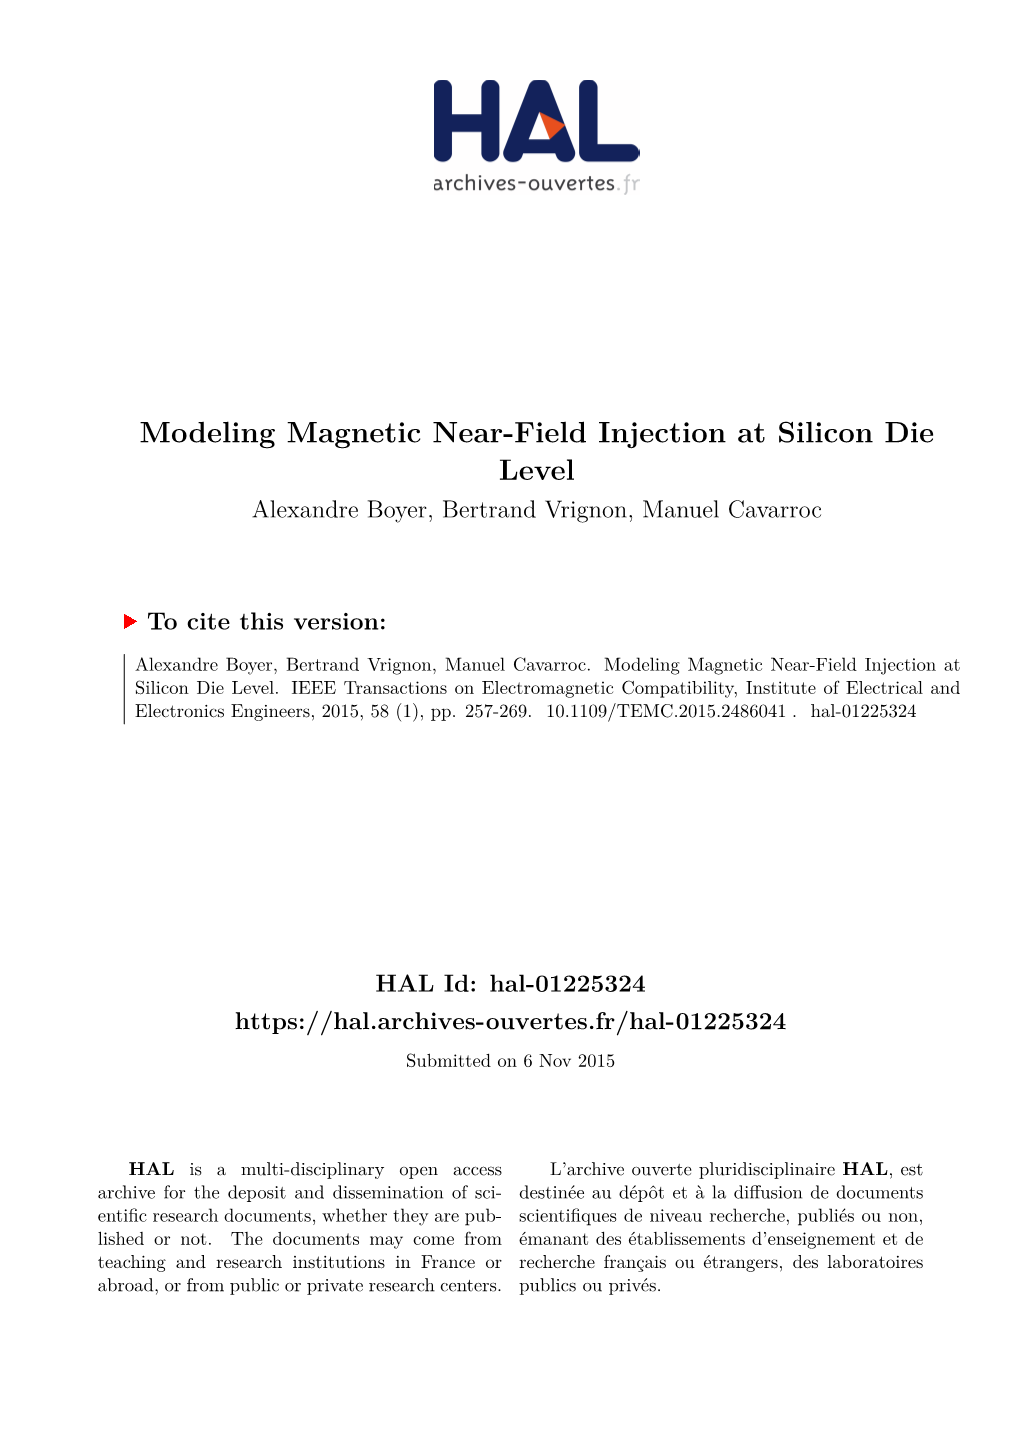 Modeling Magnetic Near-Field Injection at Silicon Die Level Alexandre Boyer, Bertrand Vrignon, Manuel Cavarroc